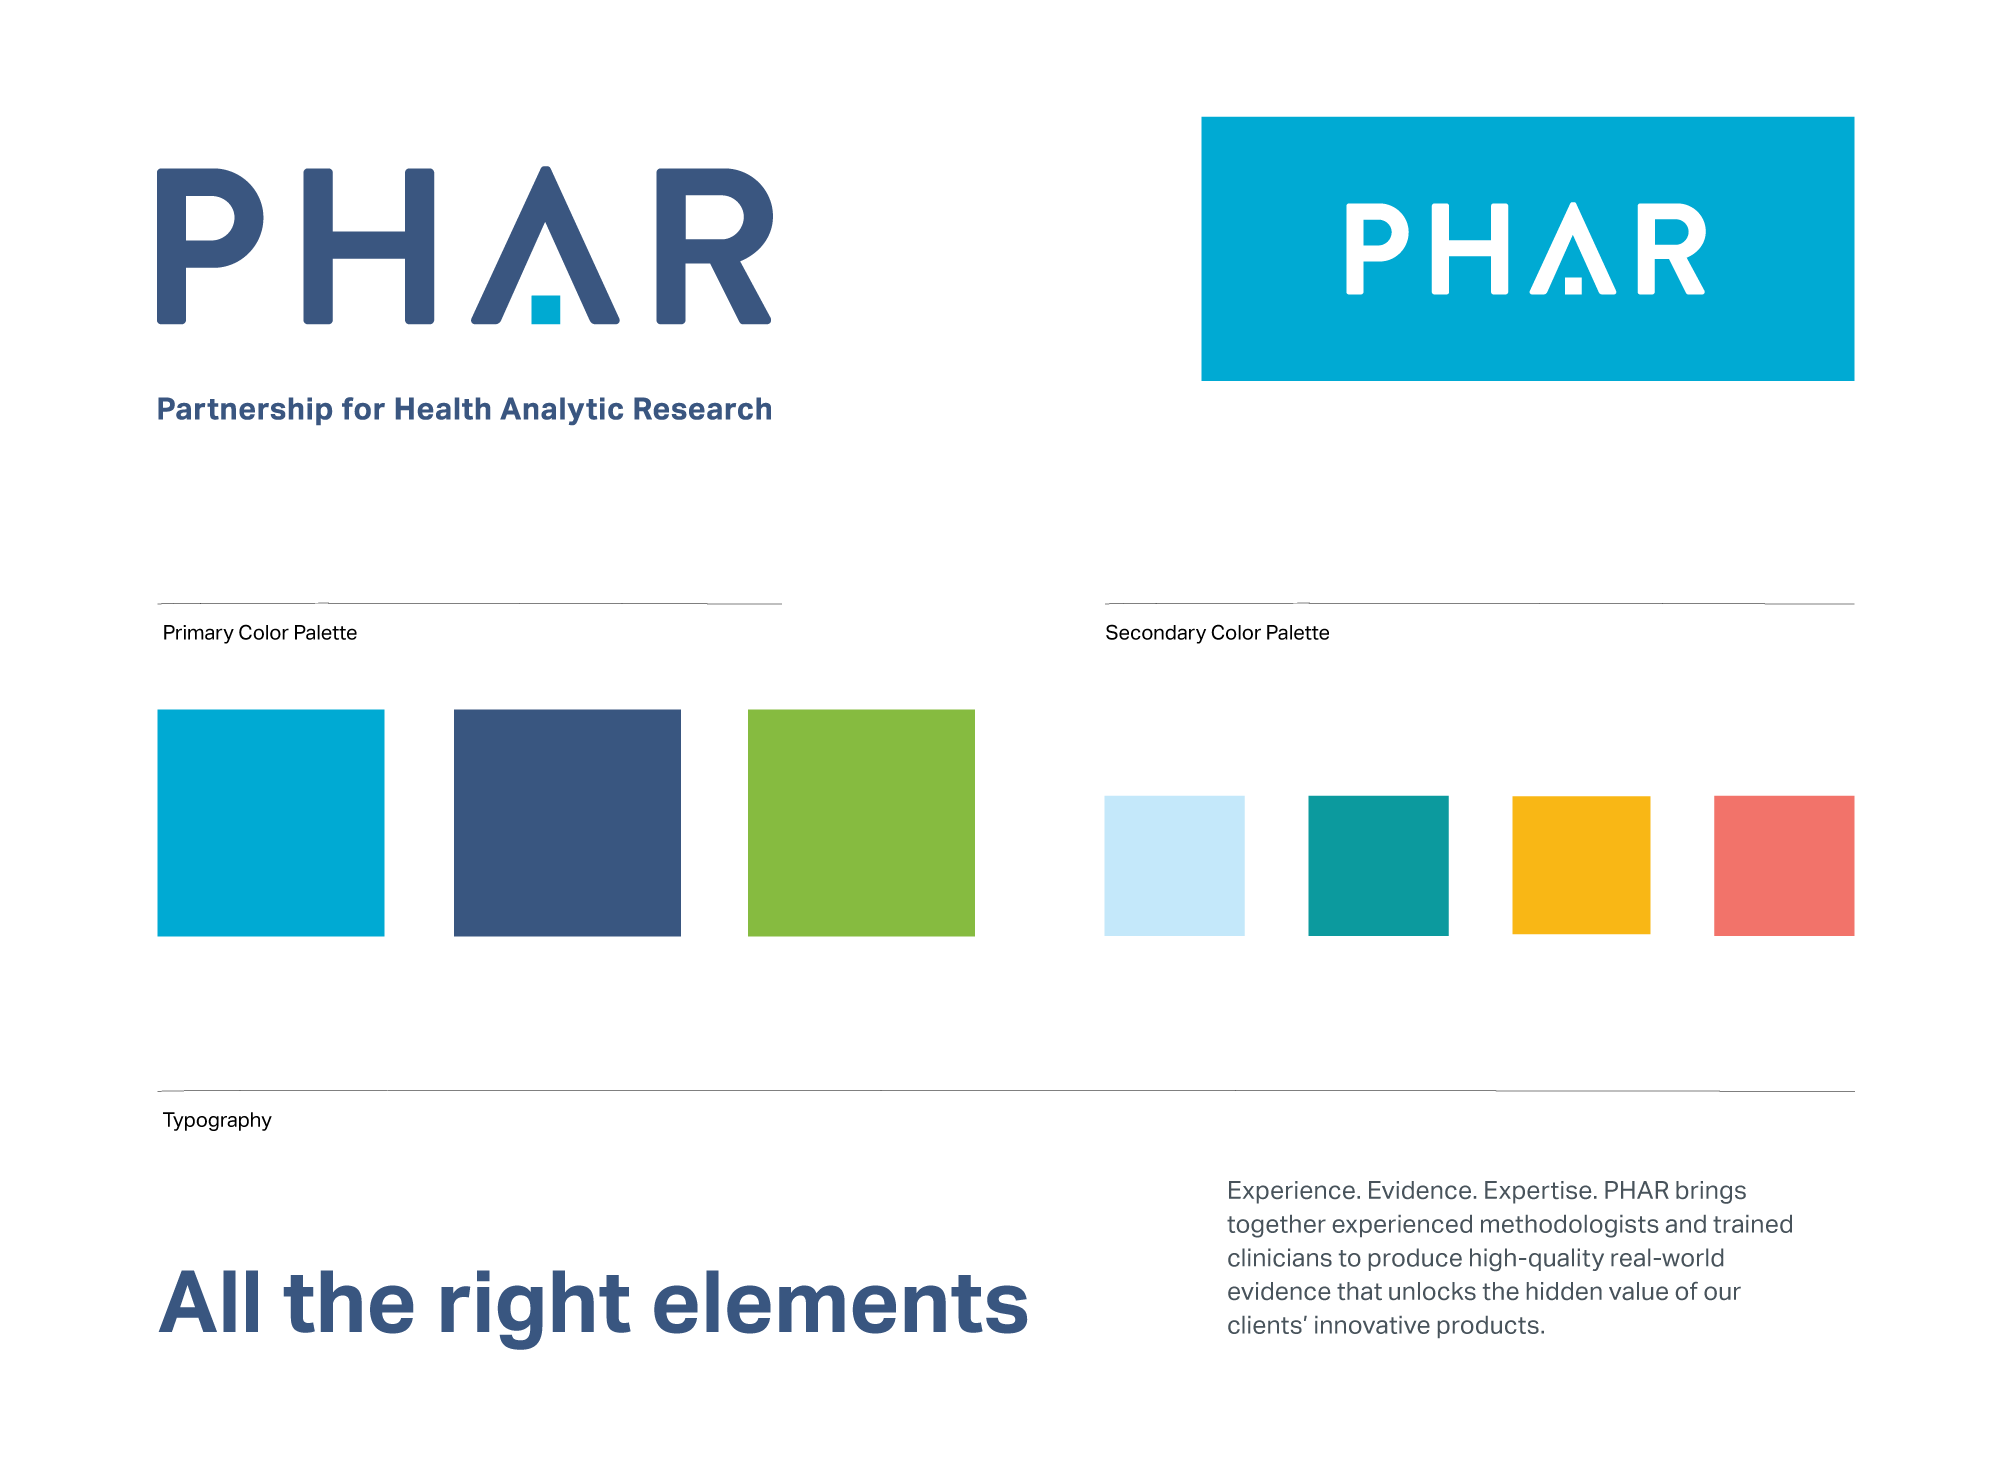 PHAR brand elements